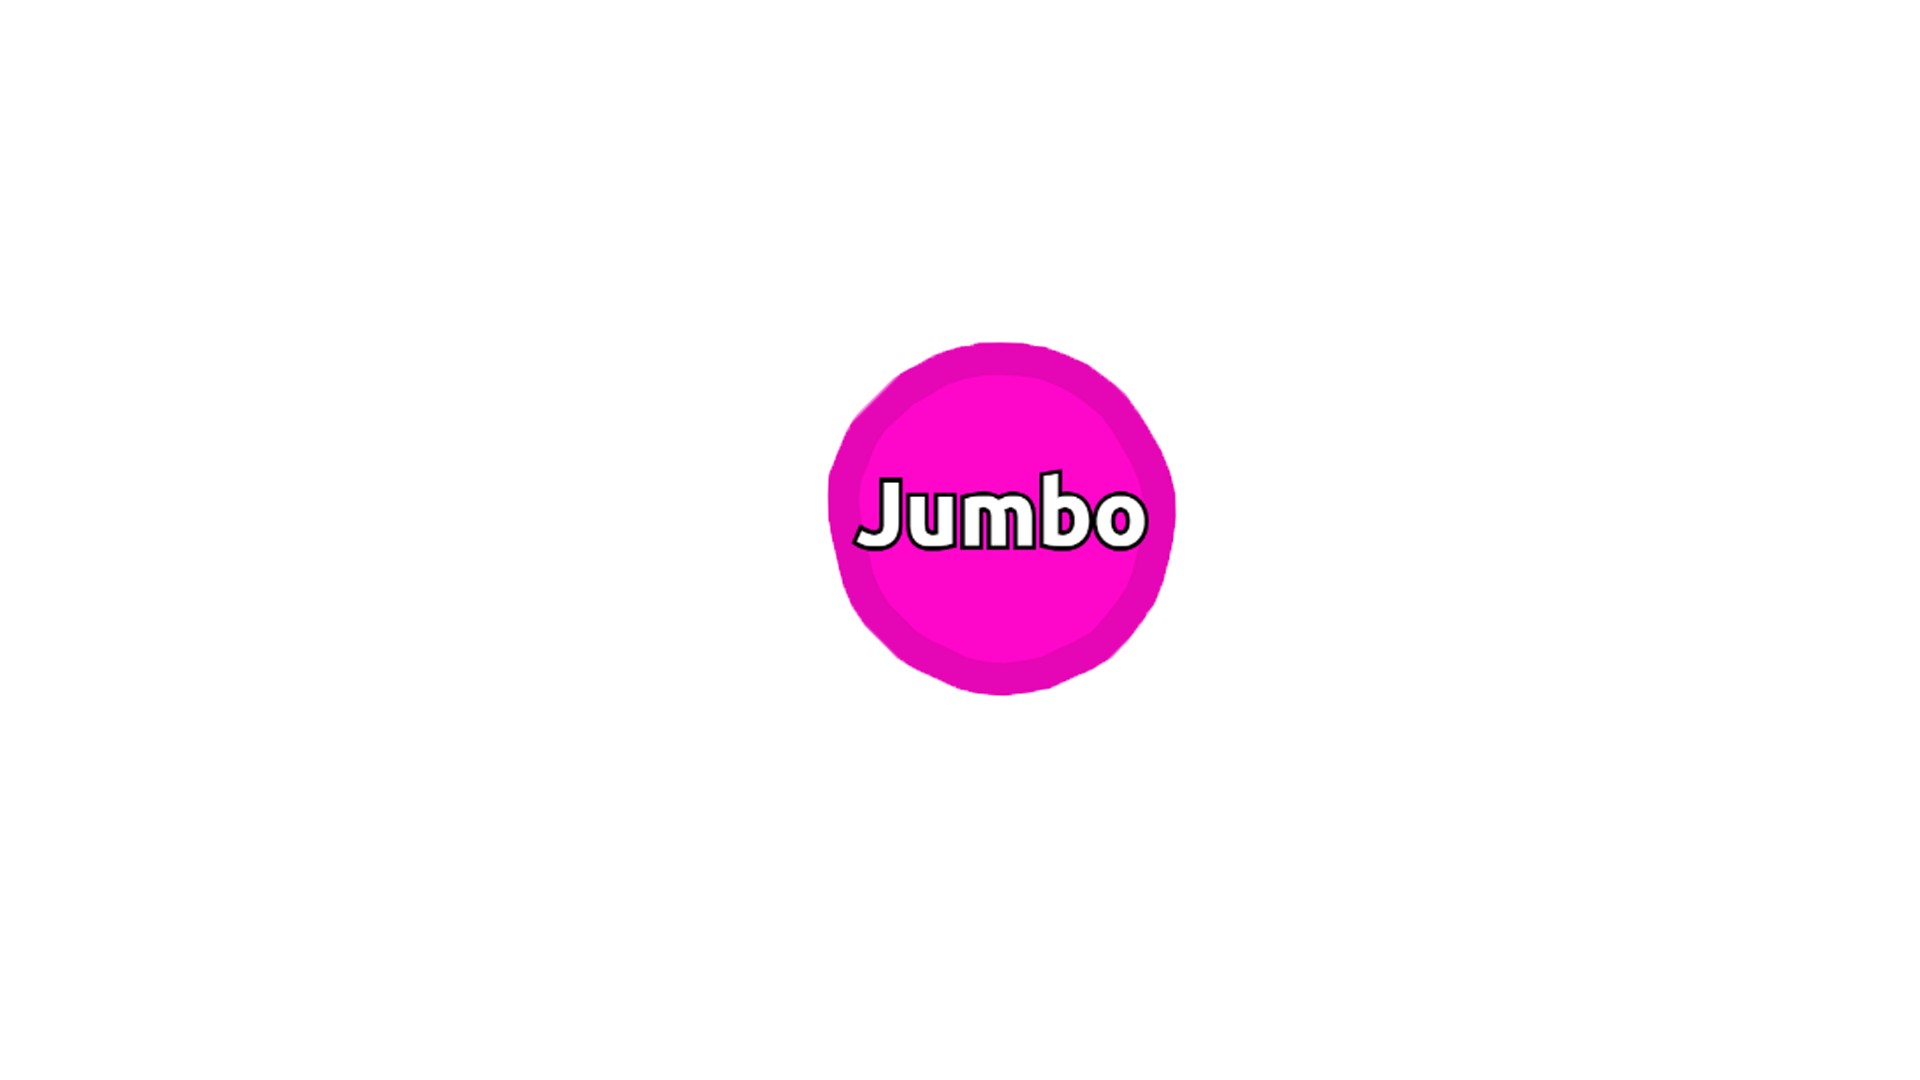 Jumbo L.L.C